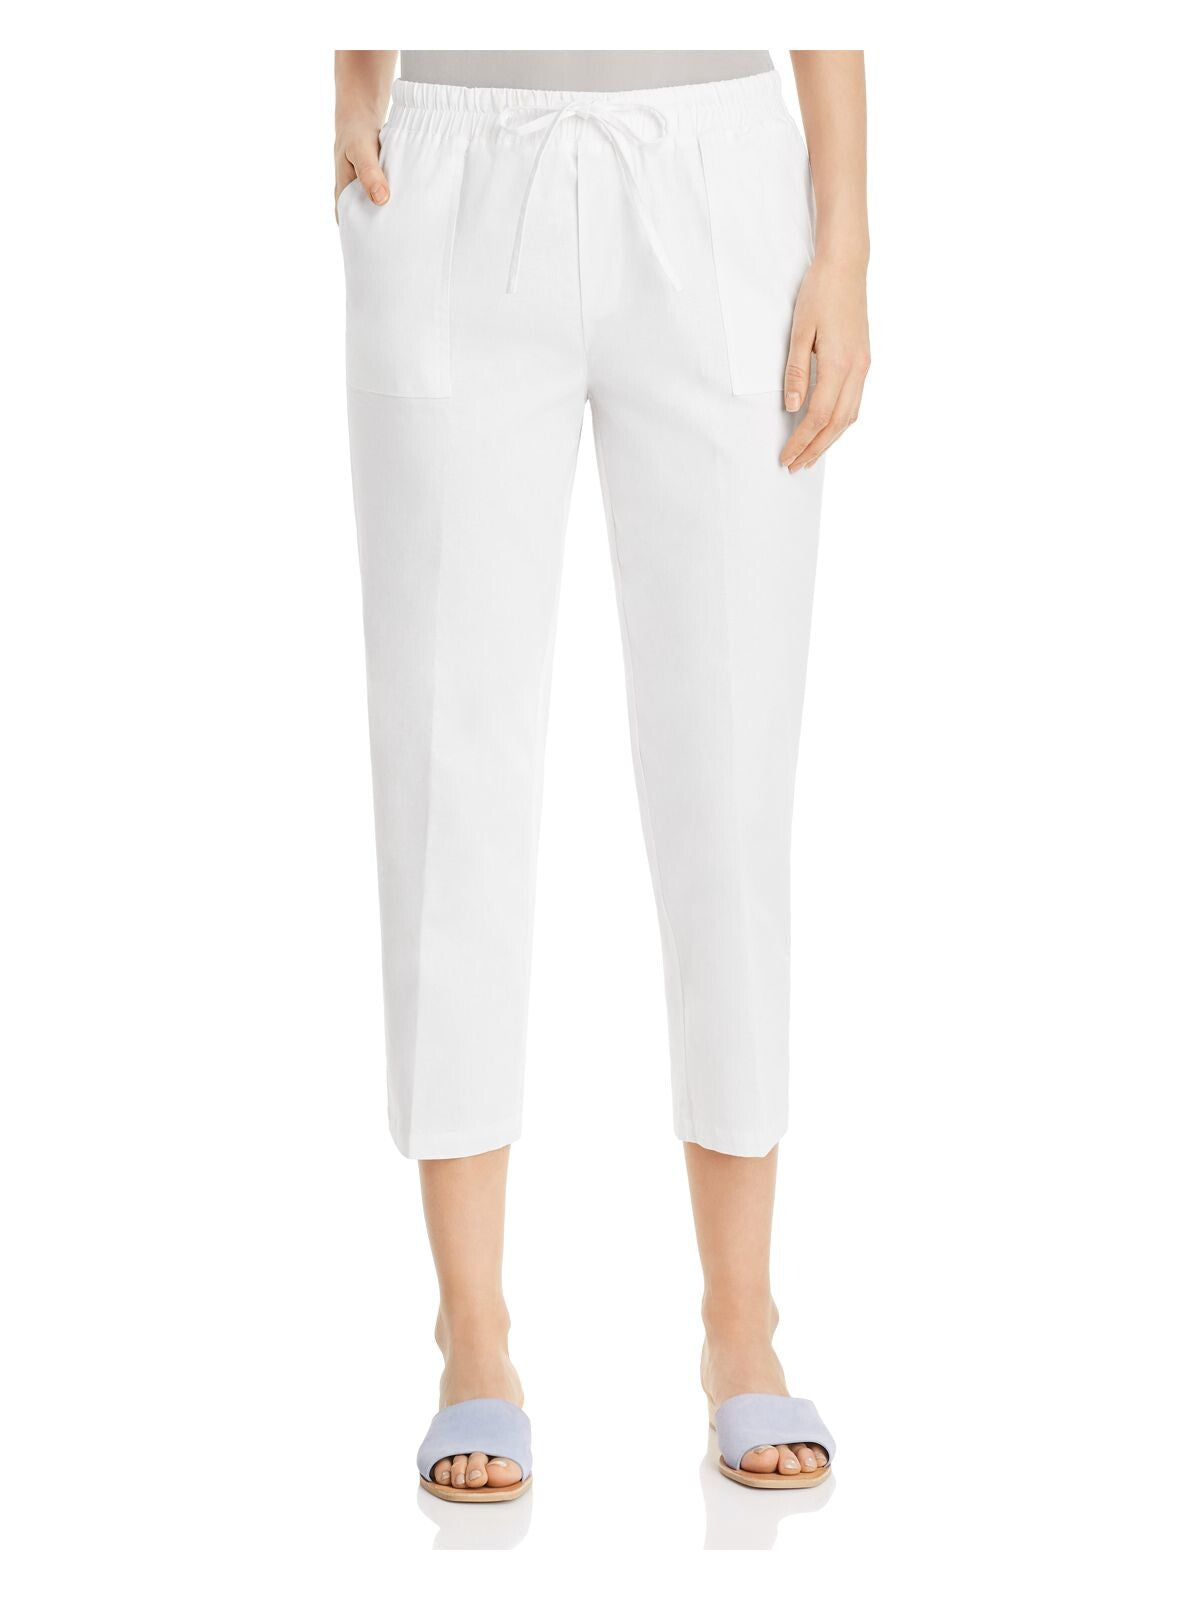 LE GALI Womens White Pocketed Drawstring Capri Pants M